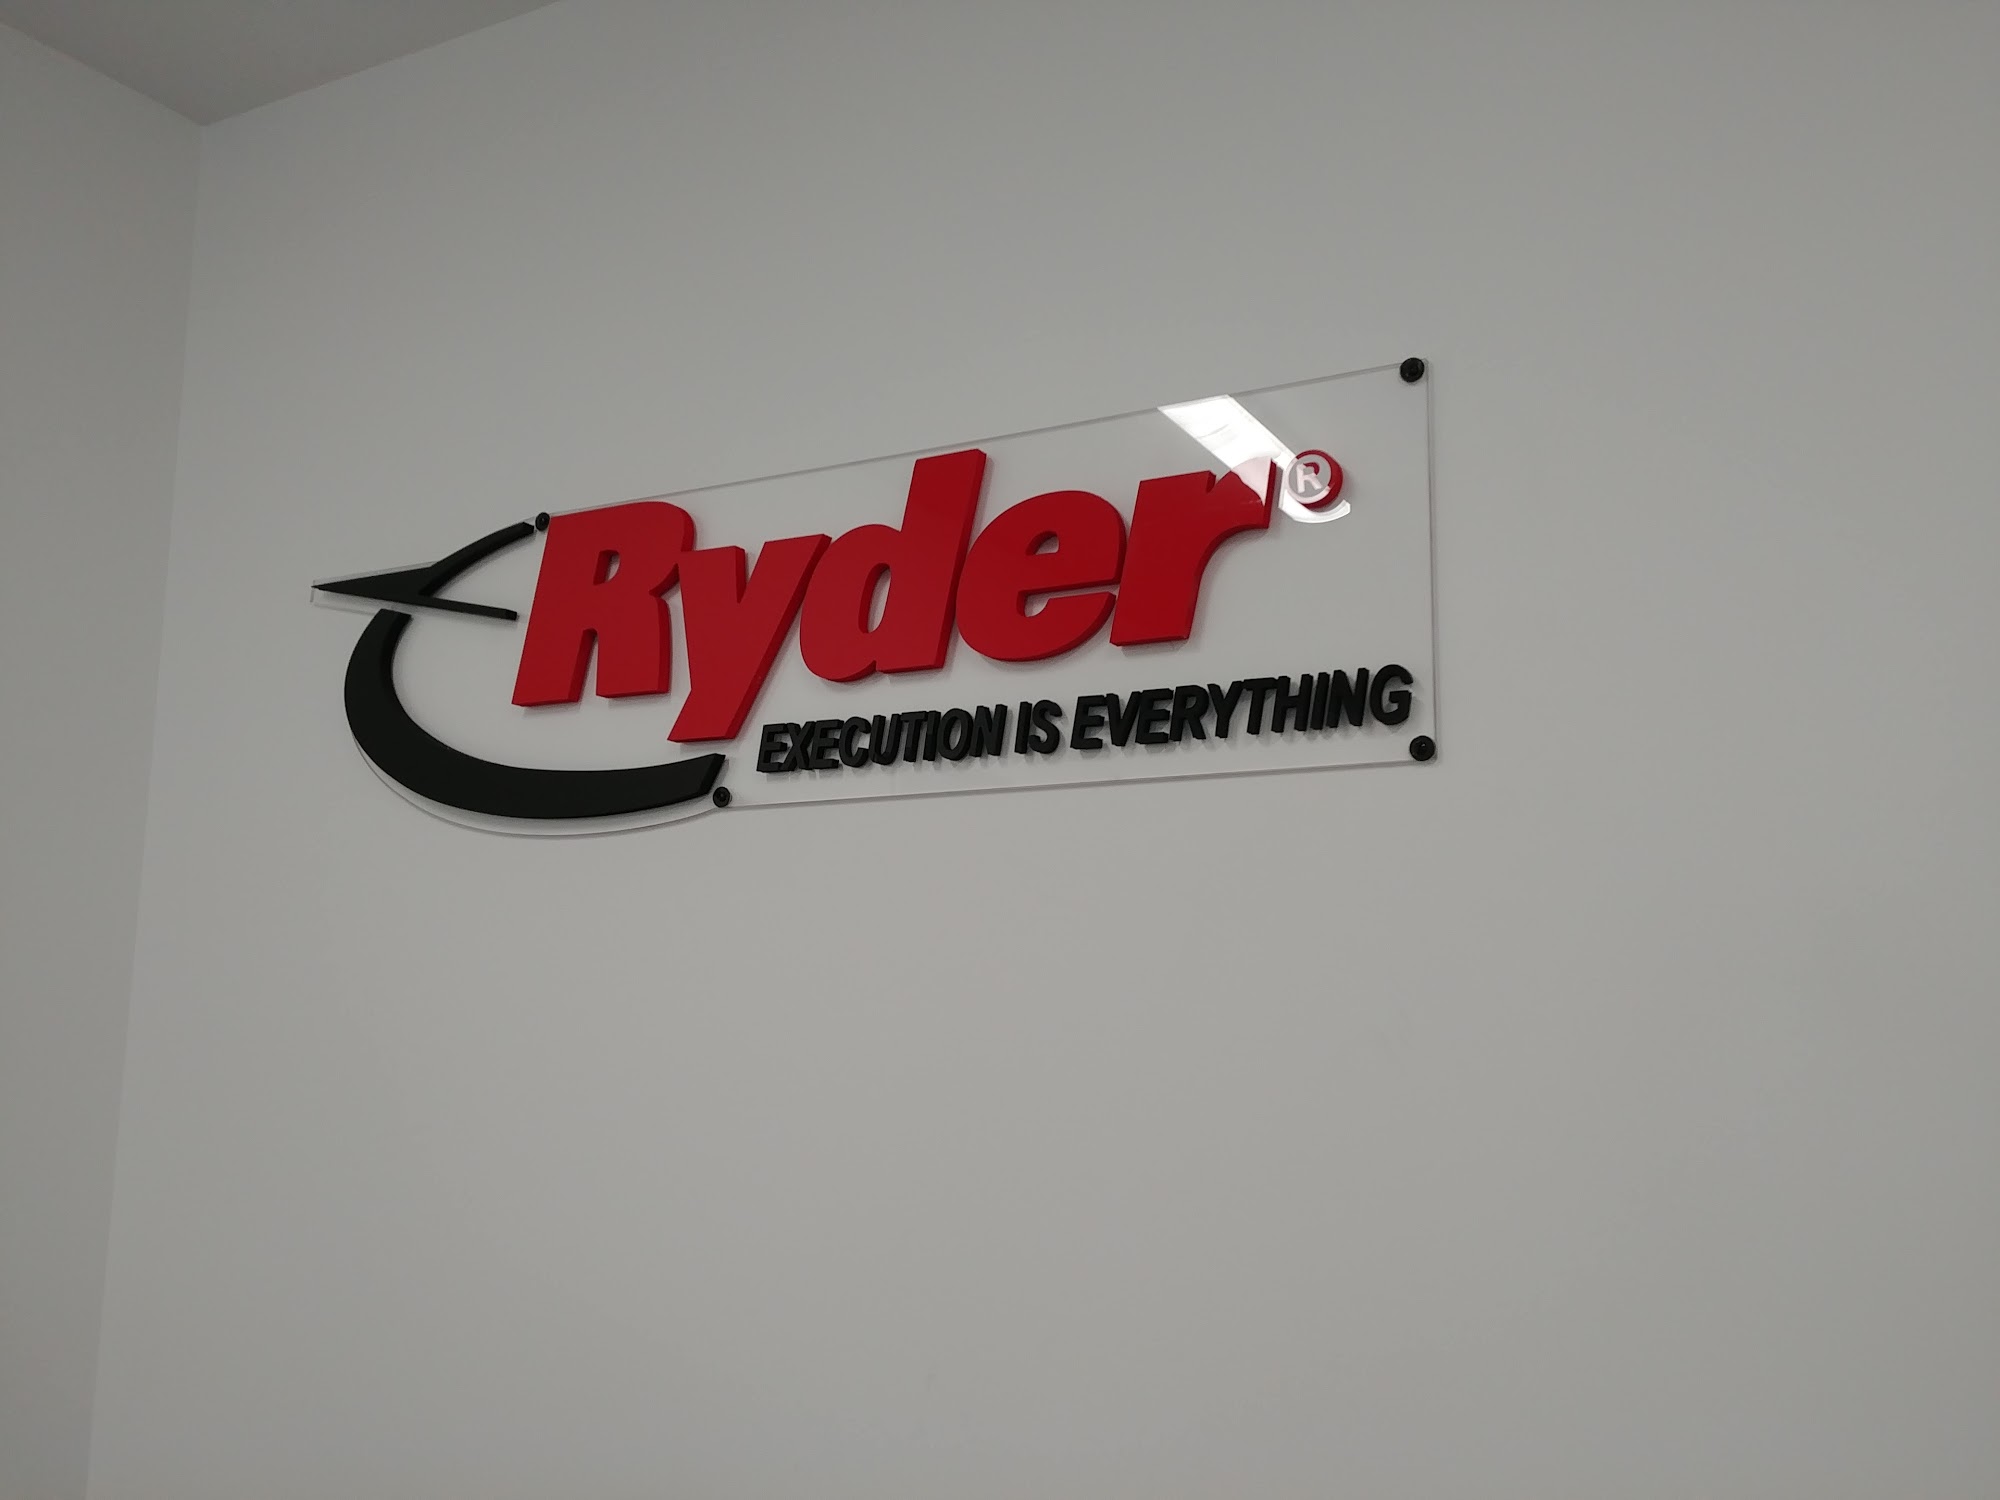 Ryder truck rental